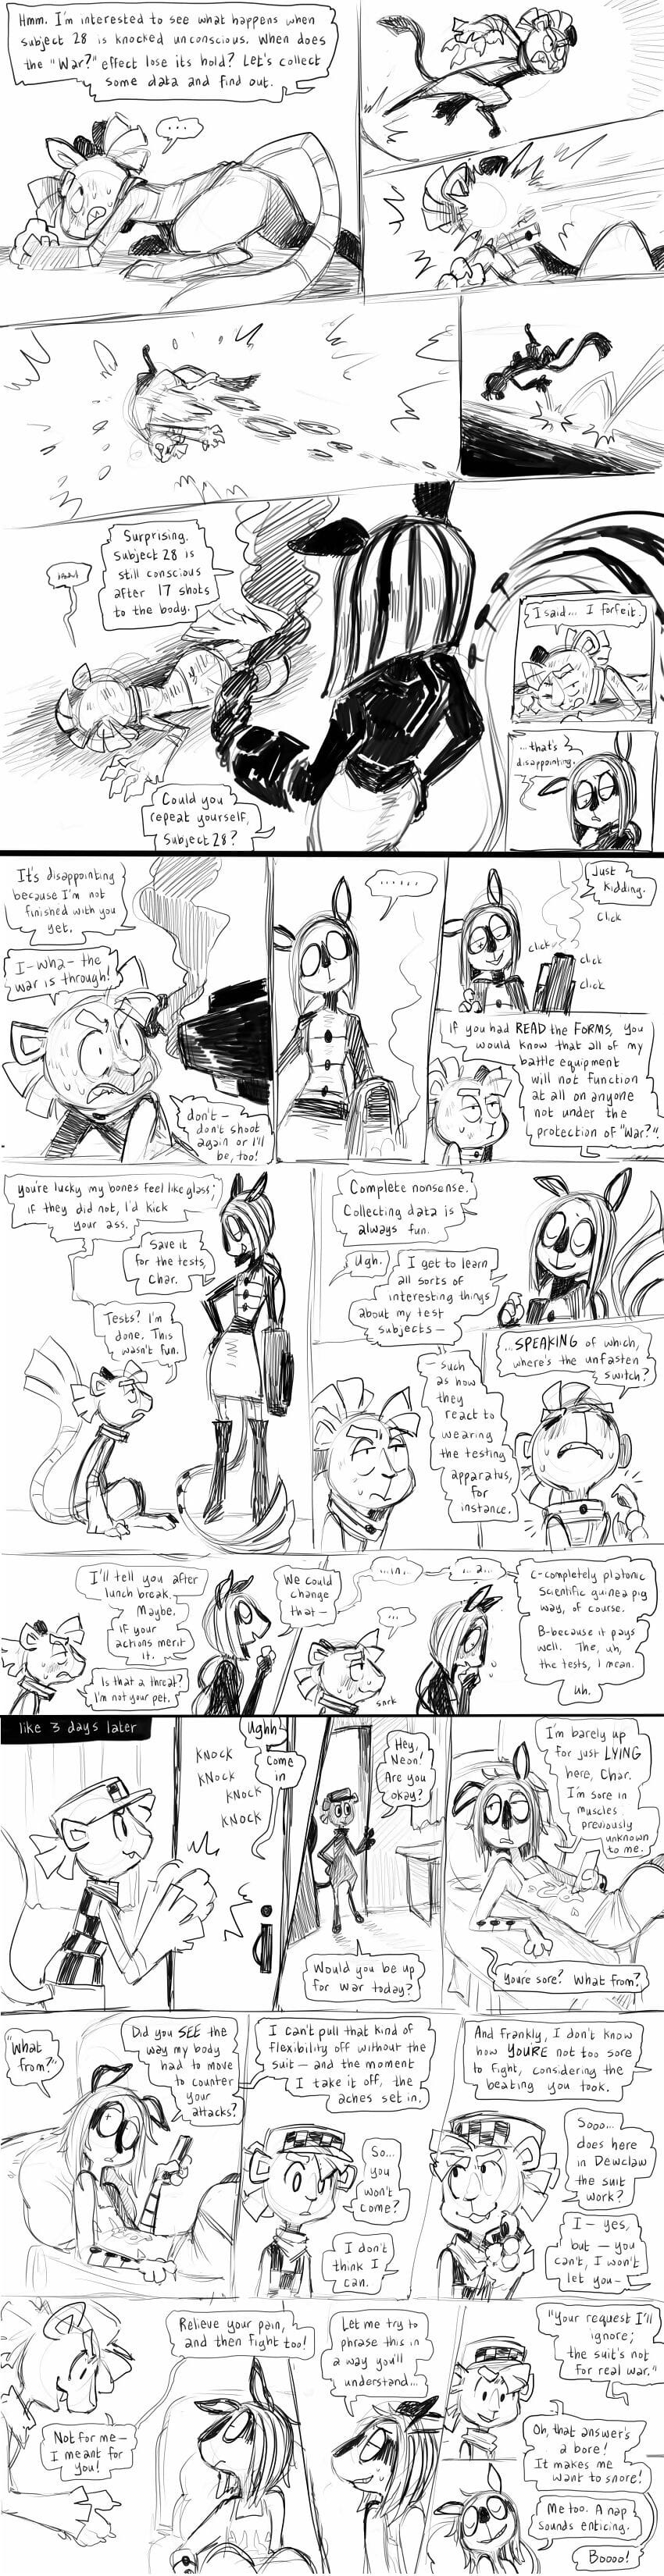 varie fumetti parte 3 page 1